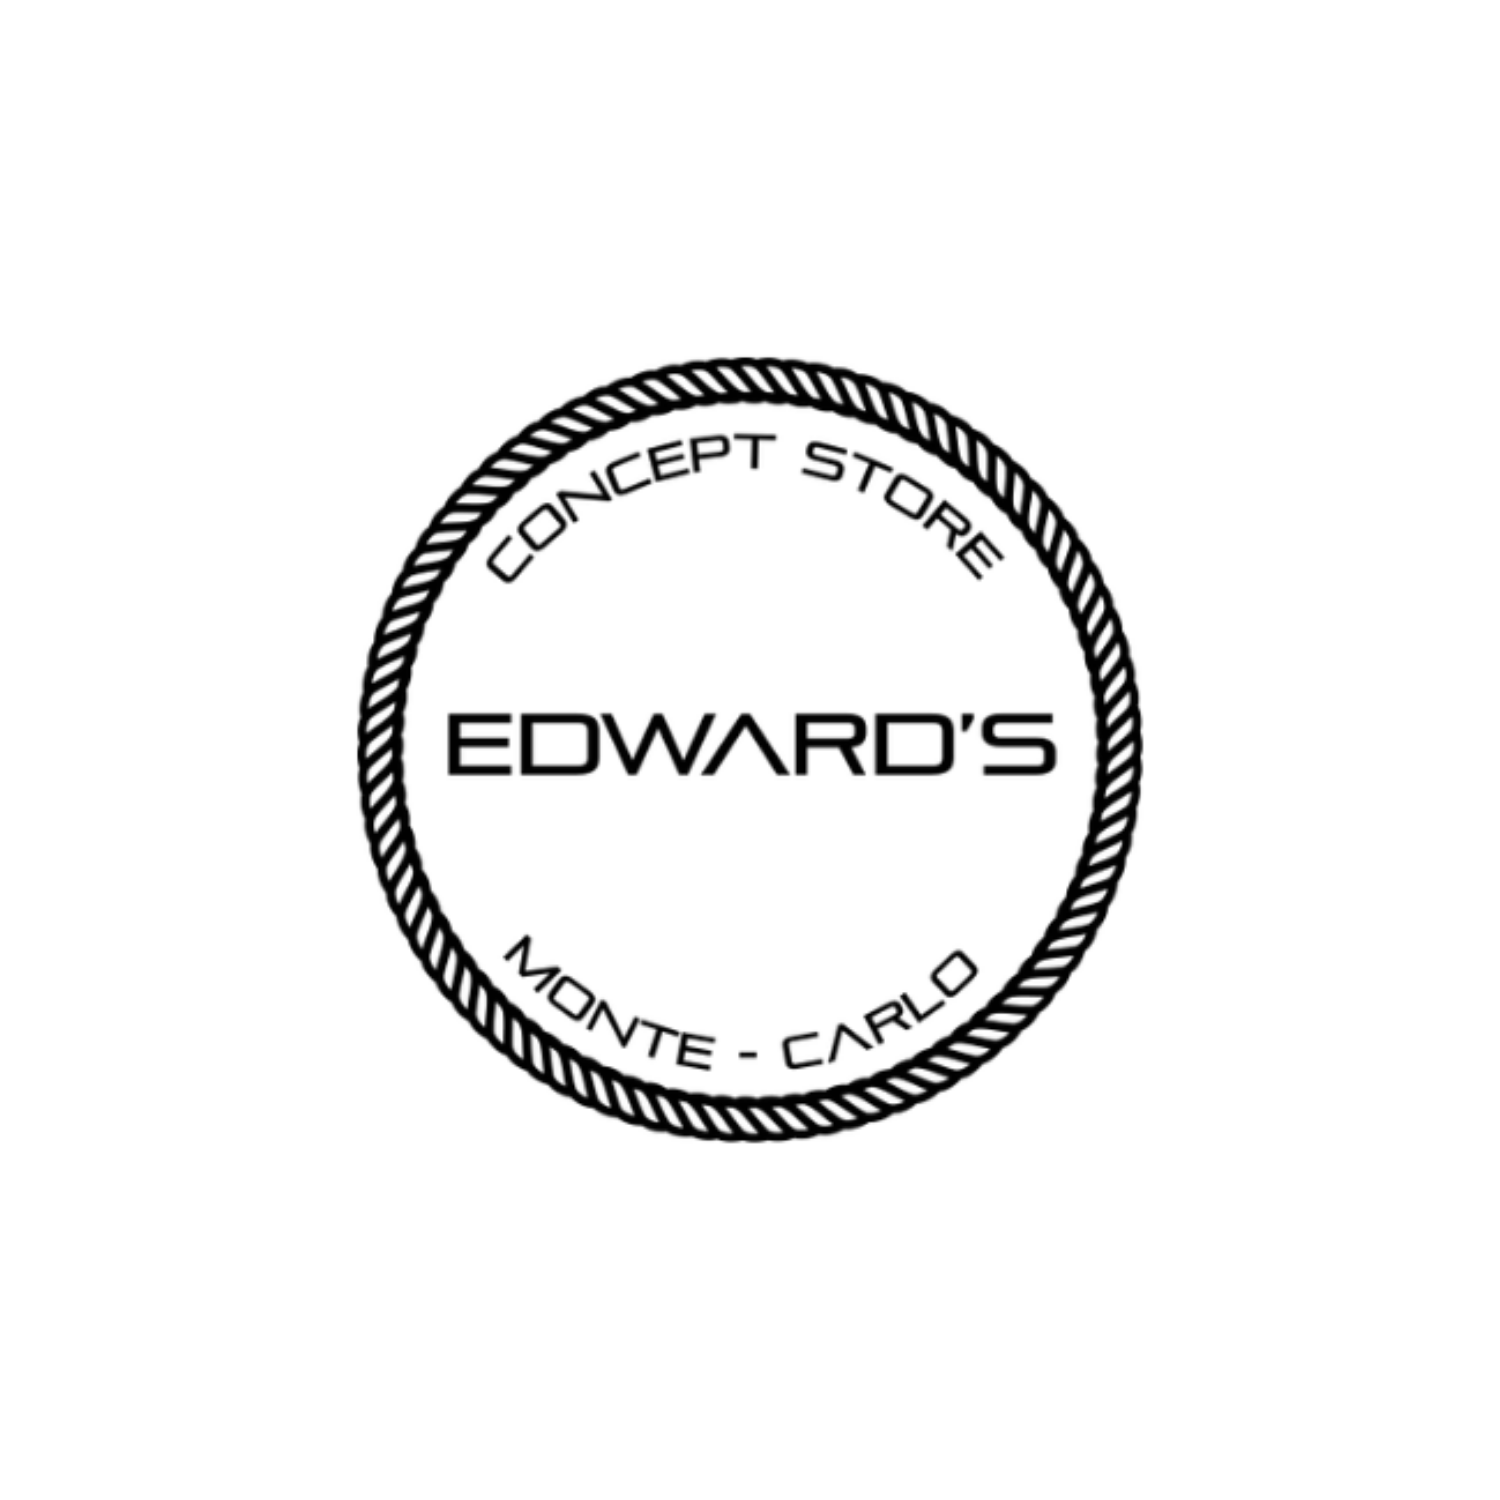 edwards-monaco-carlo-app-commercant-pret-a-porter